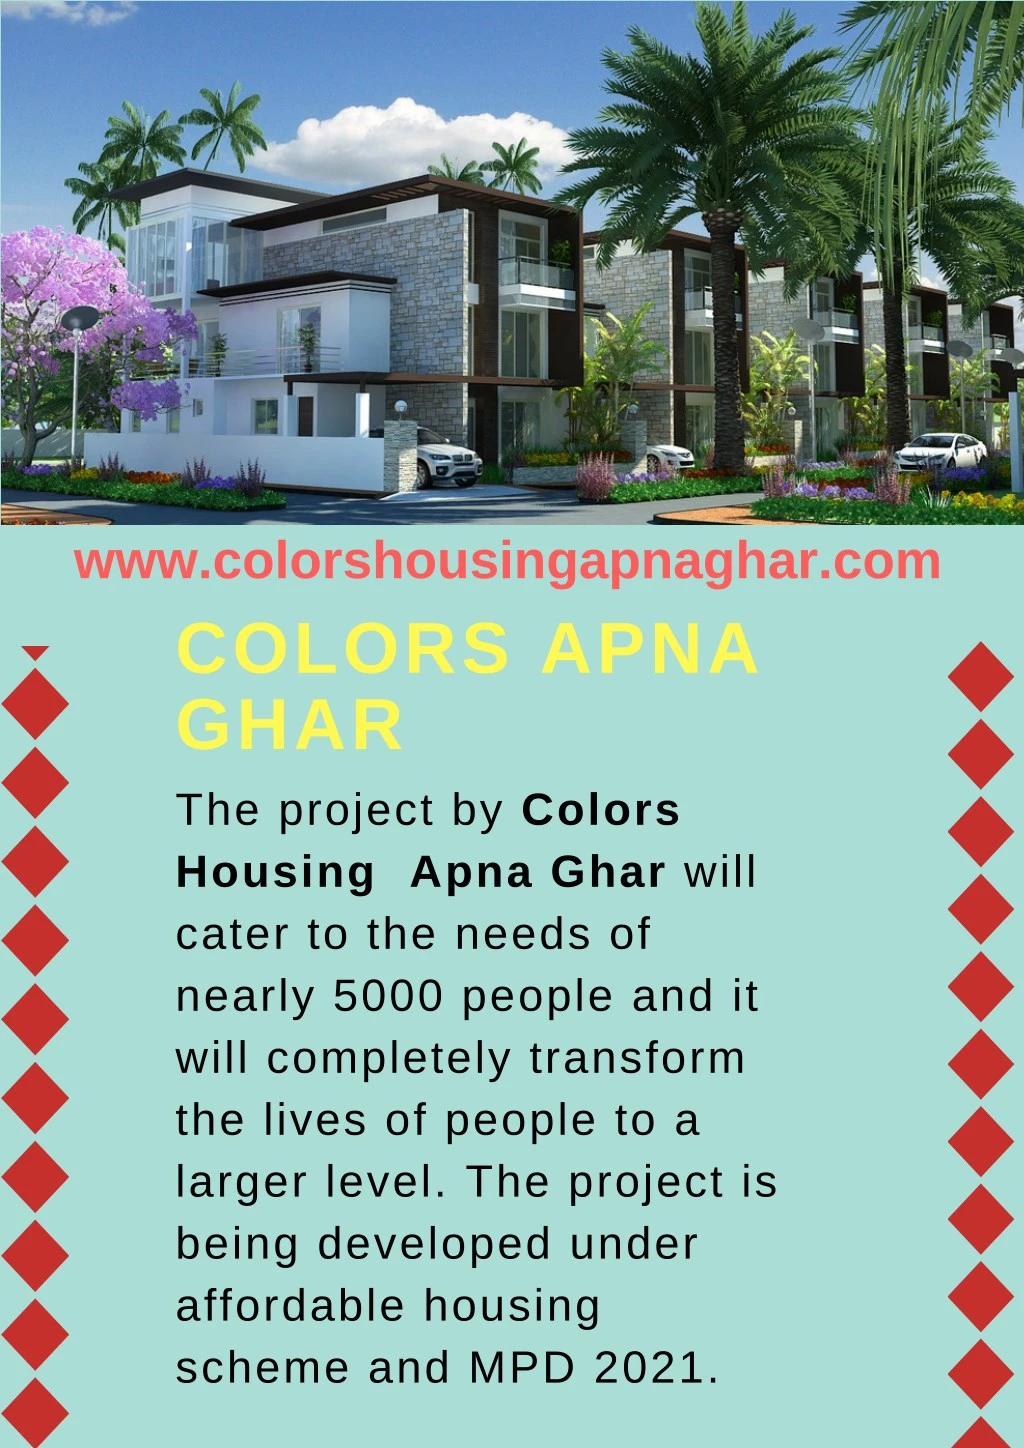 www colorshousingapnaghar com colors apna ghar